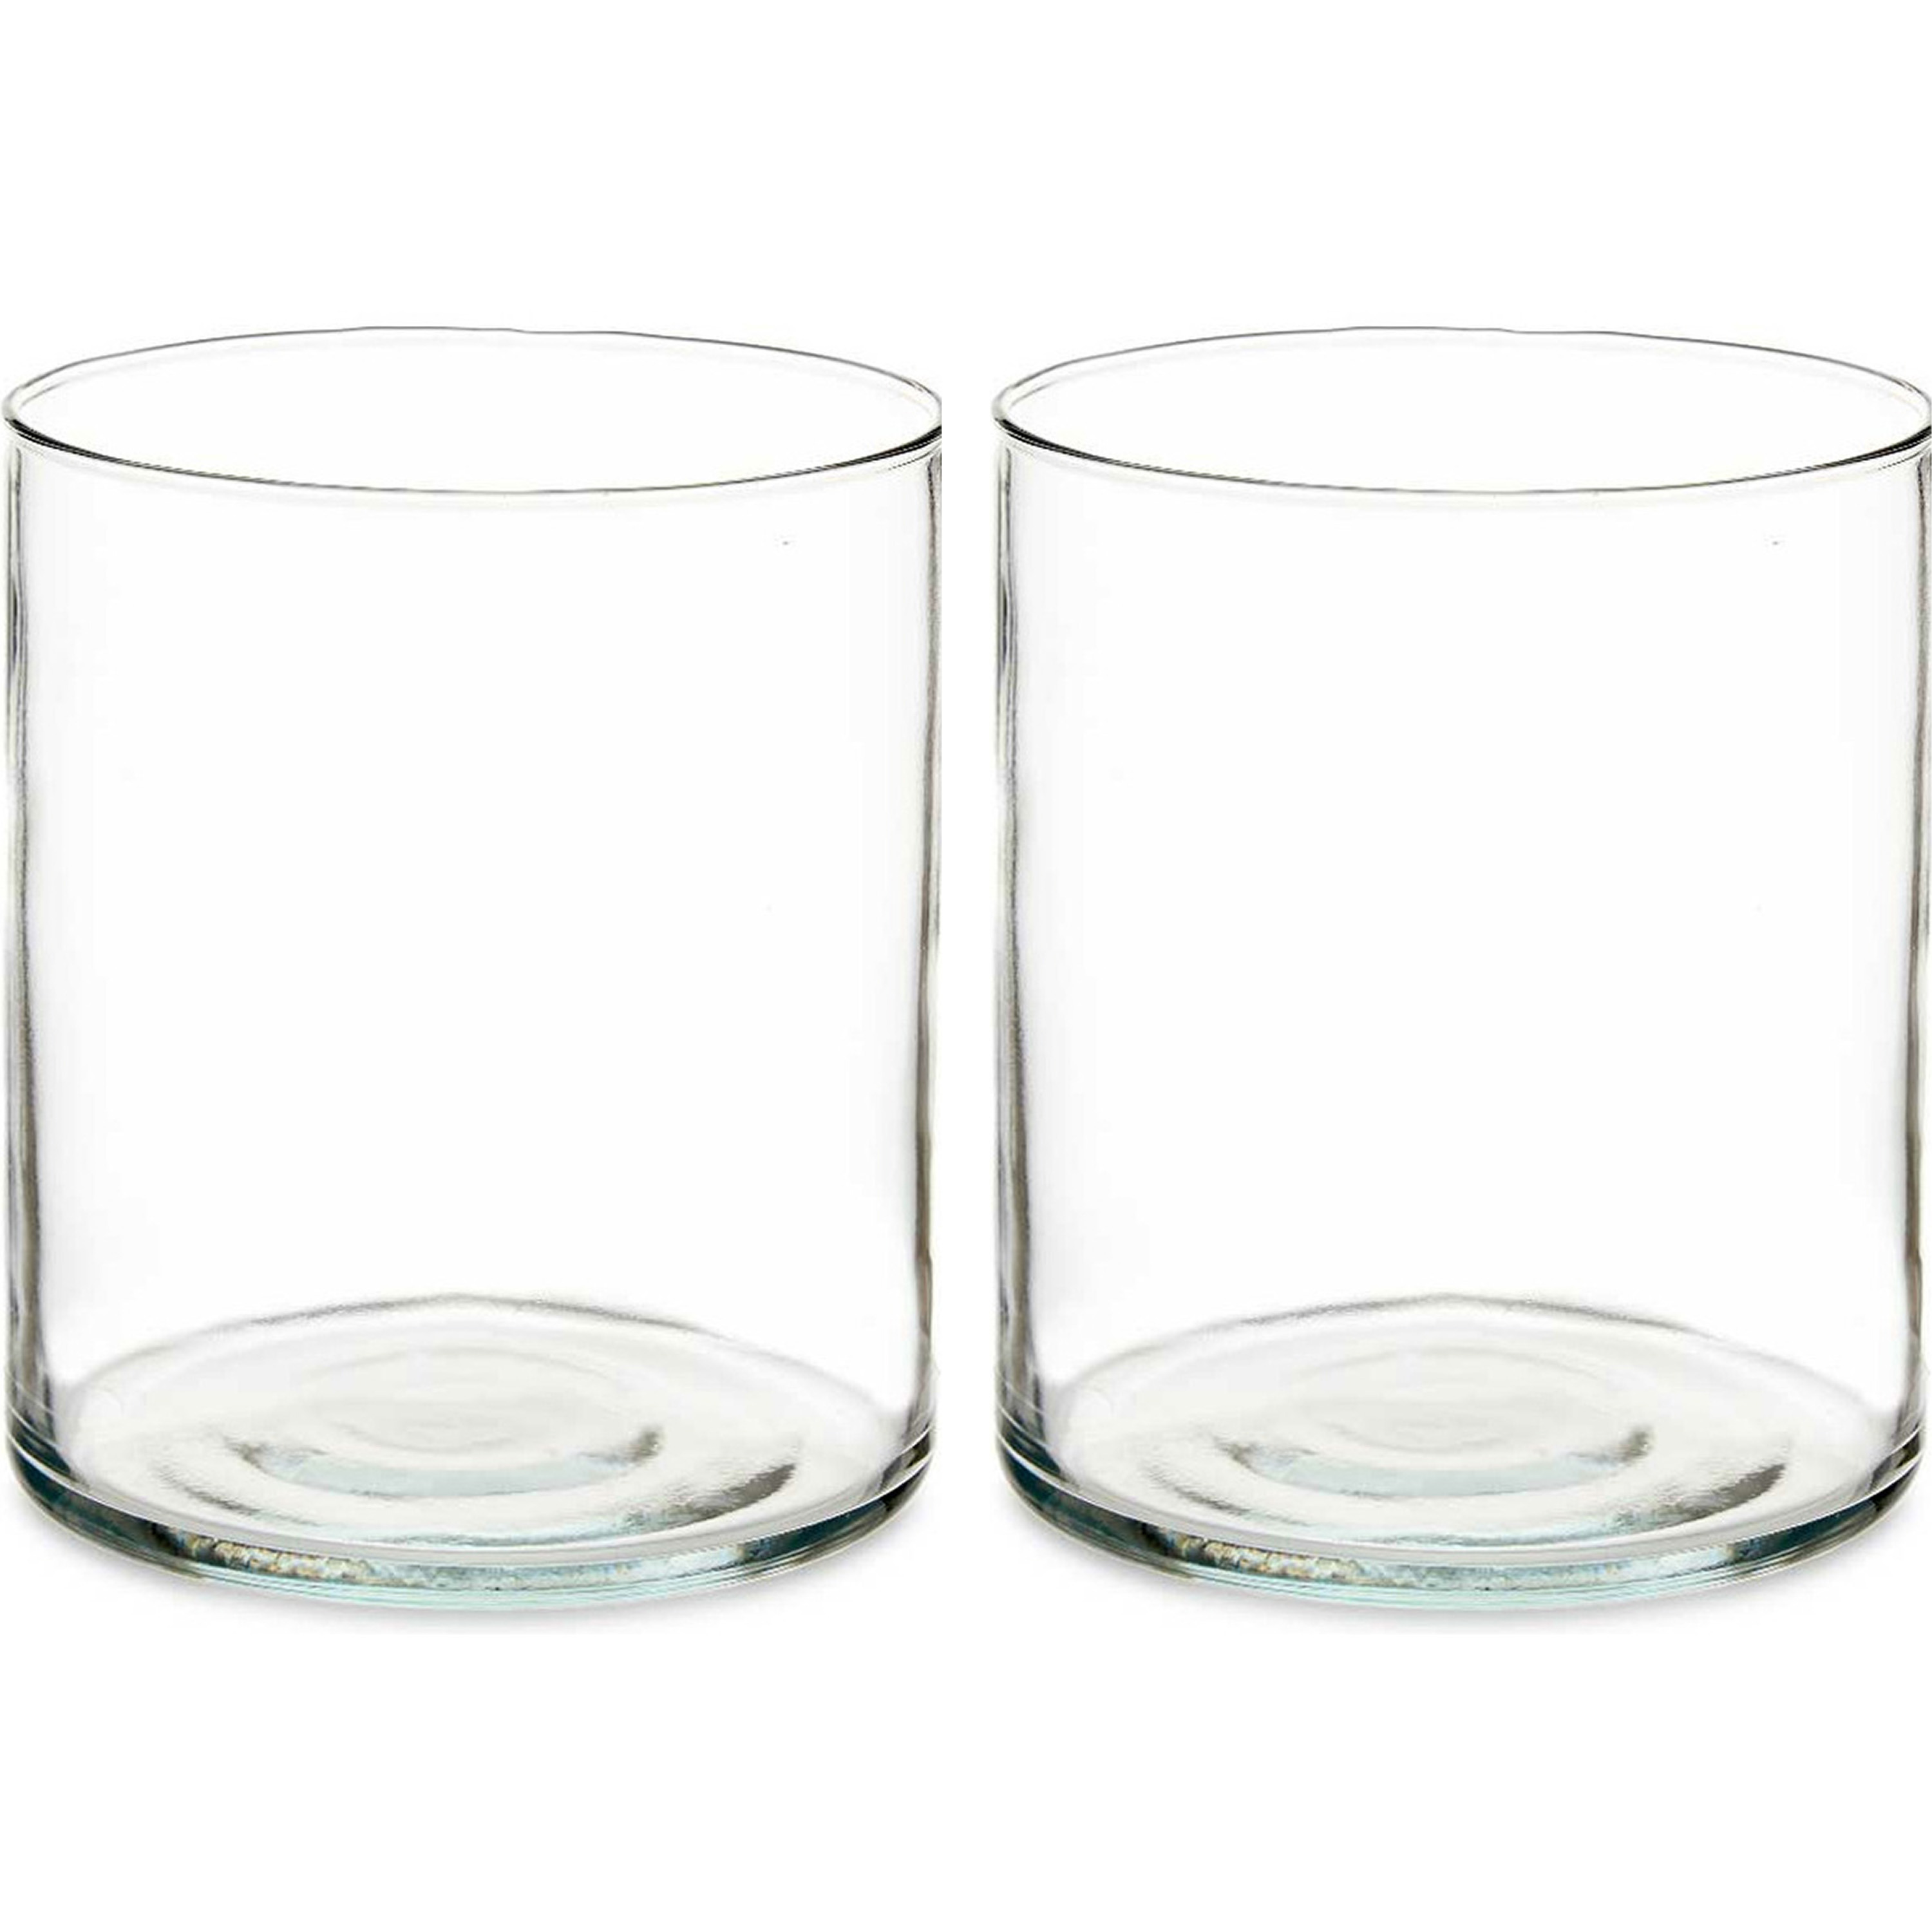 Giftdecor Bloemenvazen 2x stuks - cilinder vorm - transparant glas - 17 x 20 cm -